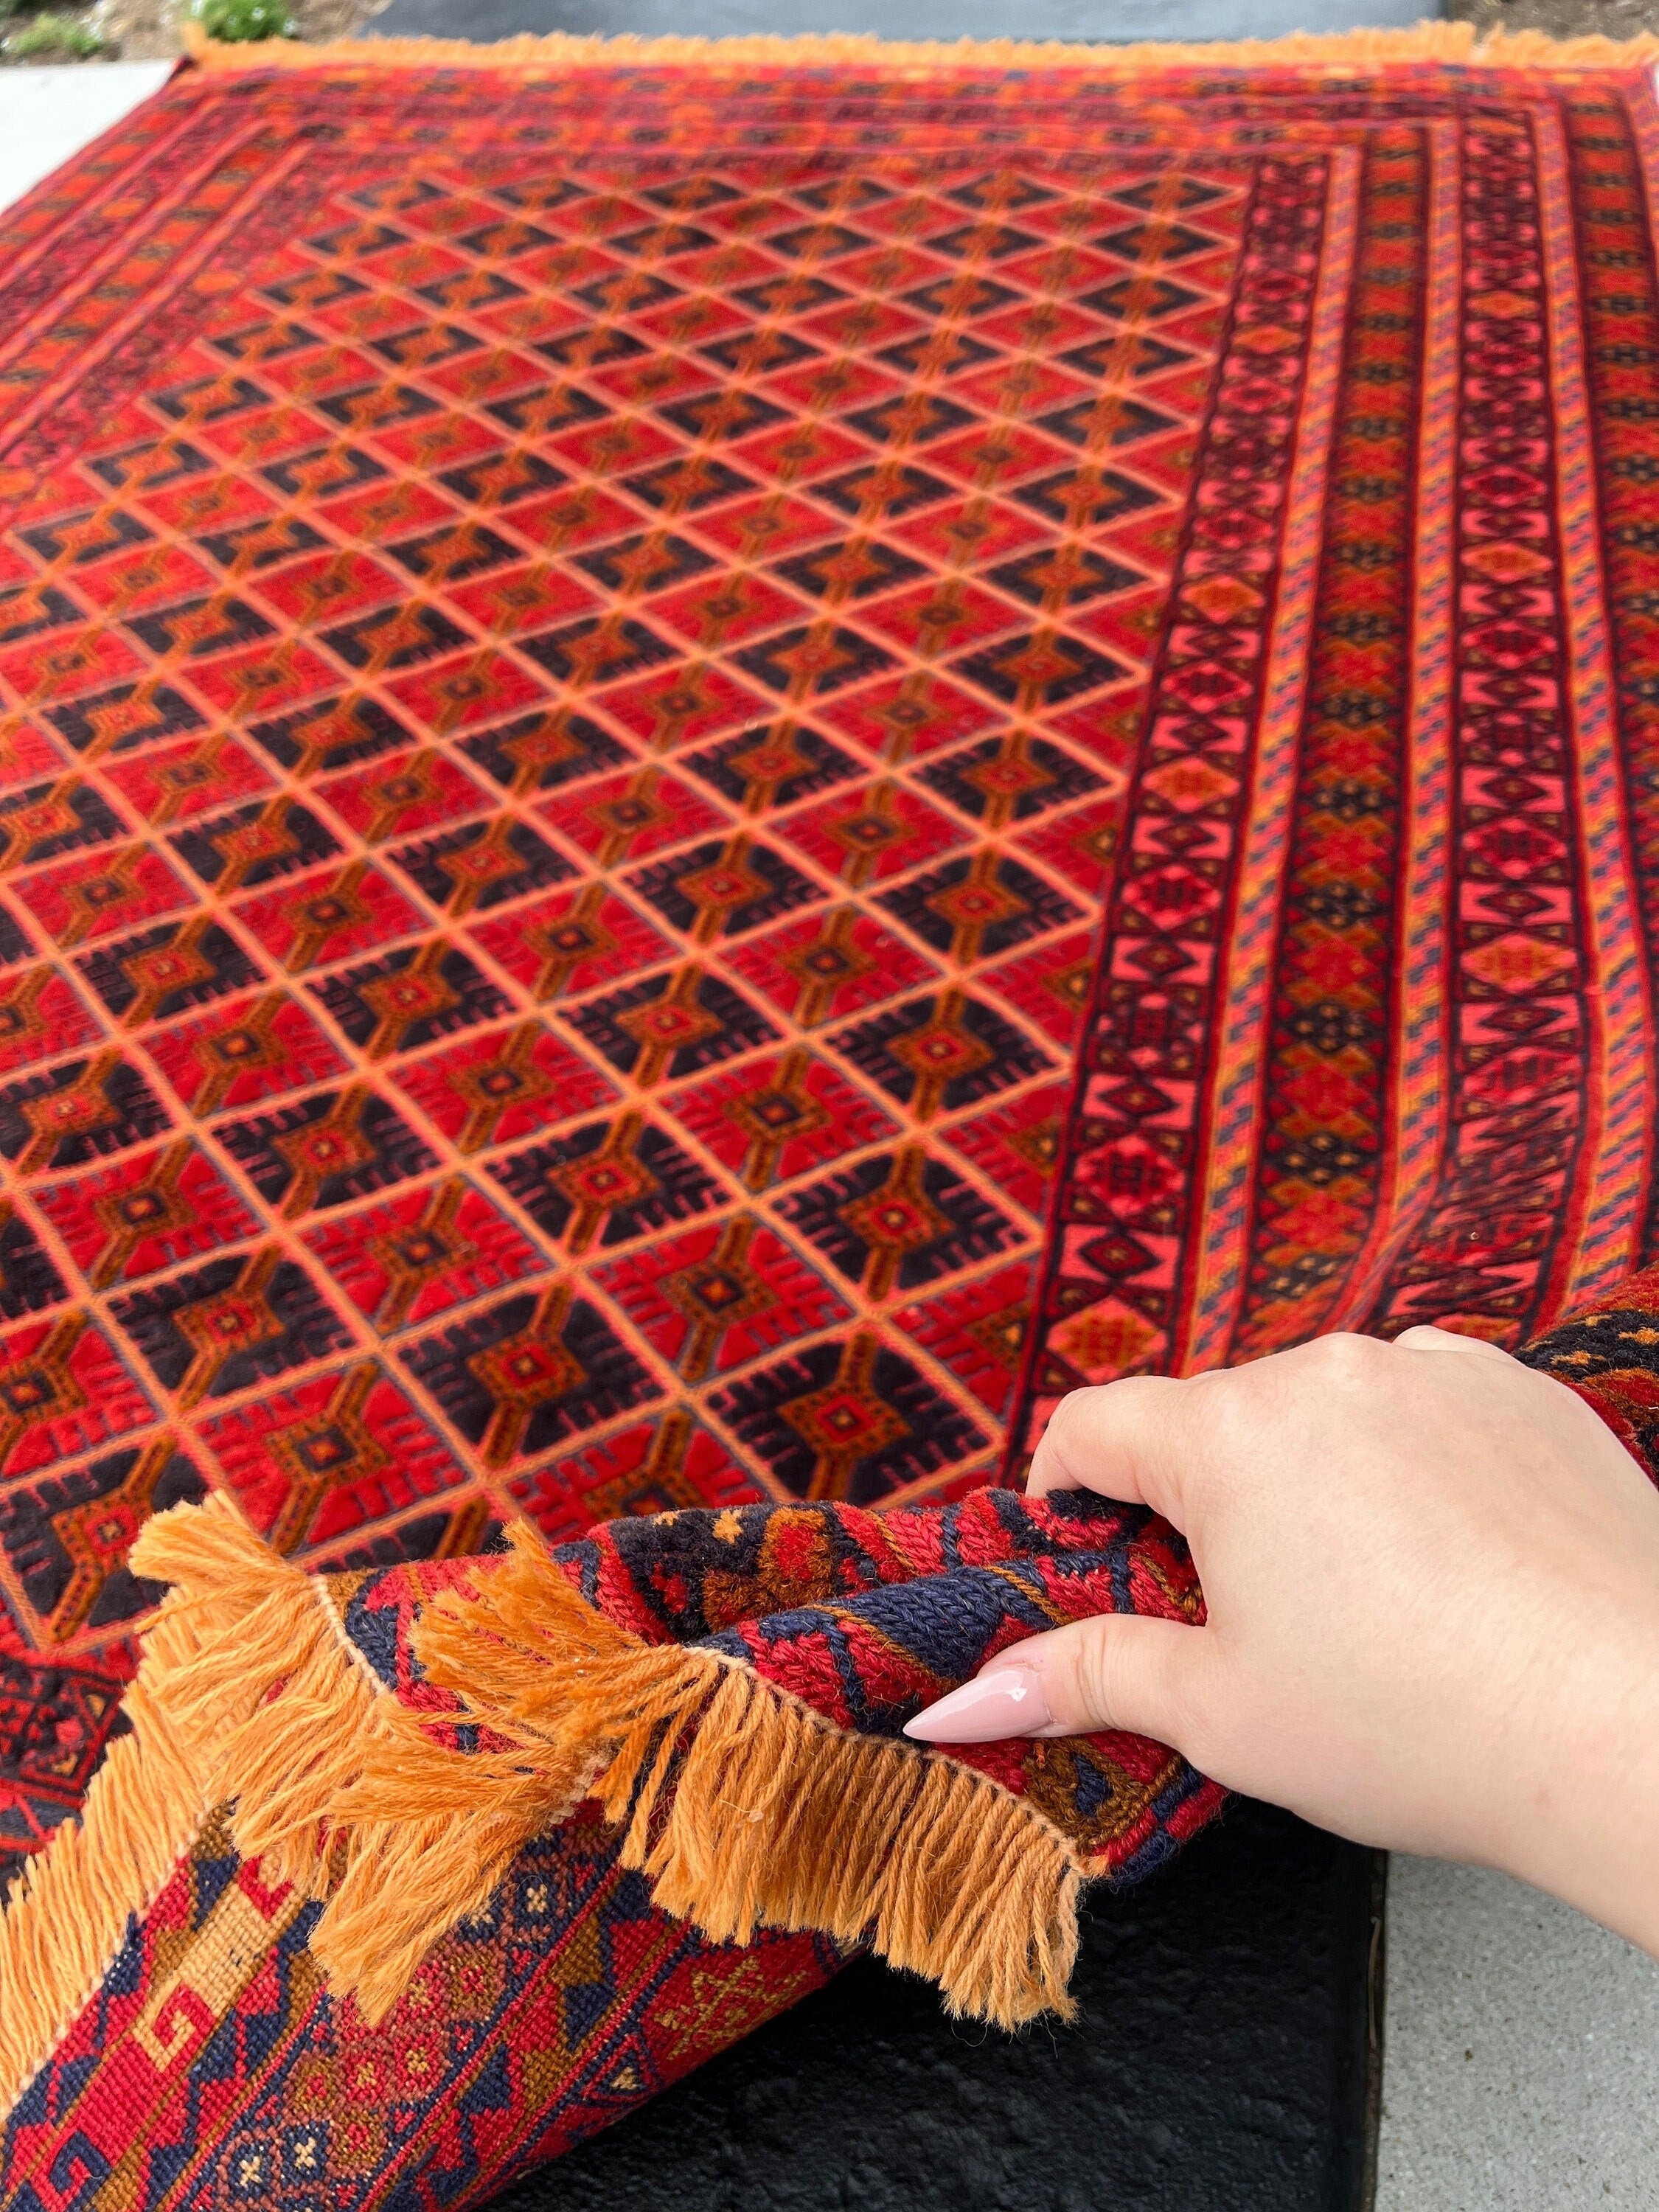 5x7 (150x215) Fair Trade Handmade Afghan Rug | Cherry Red Orange Black Taupe Crimson Red Midnight Blue | Hand Knotted Geometric Turkish Wool